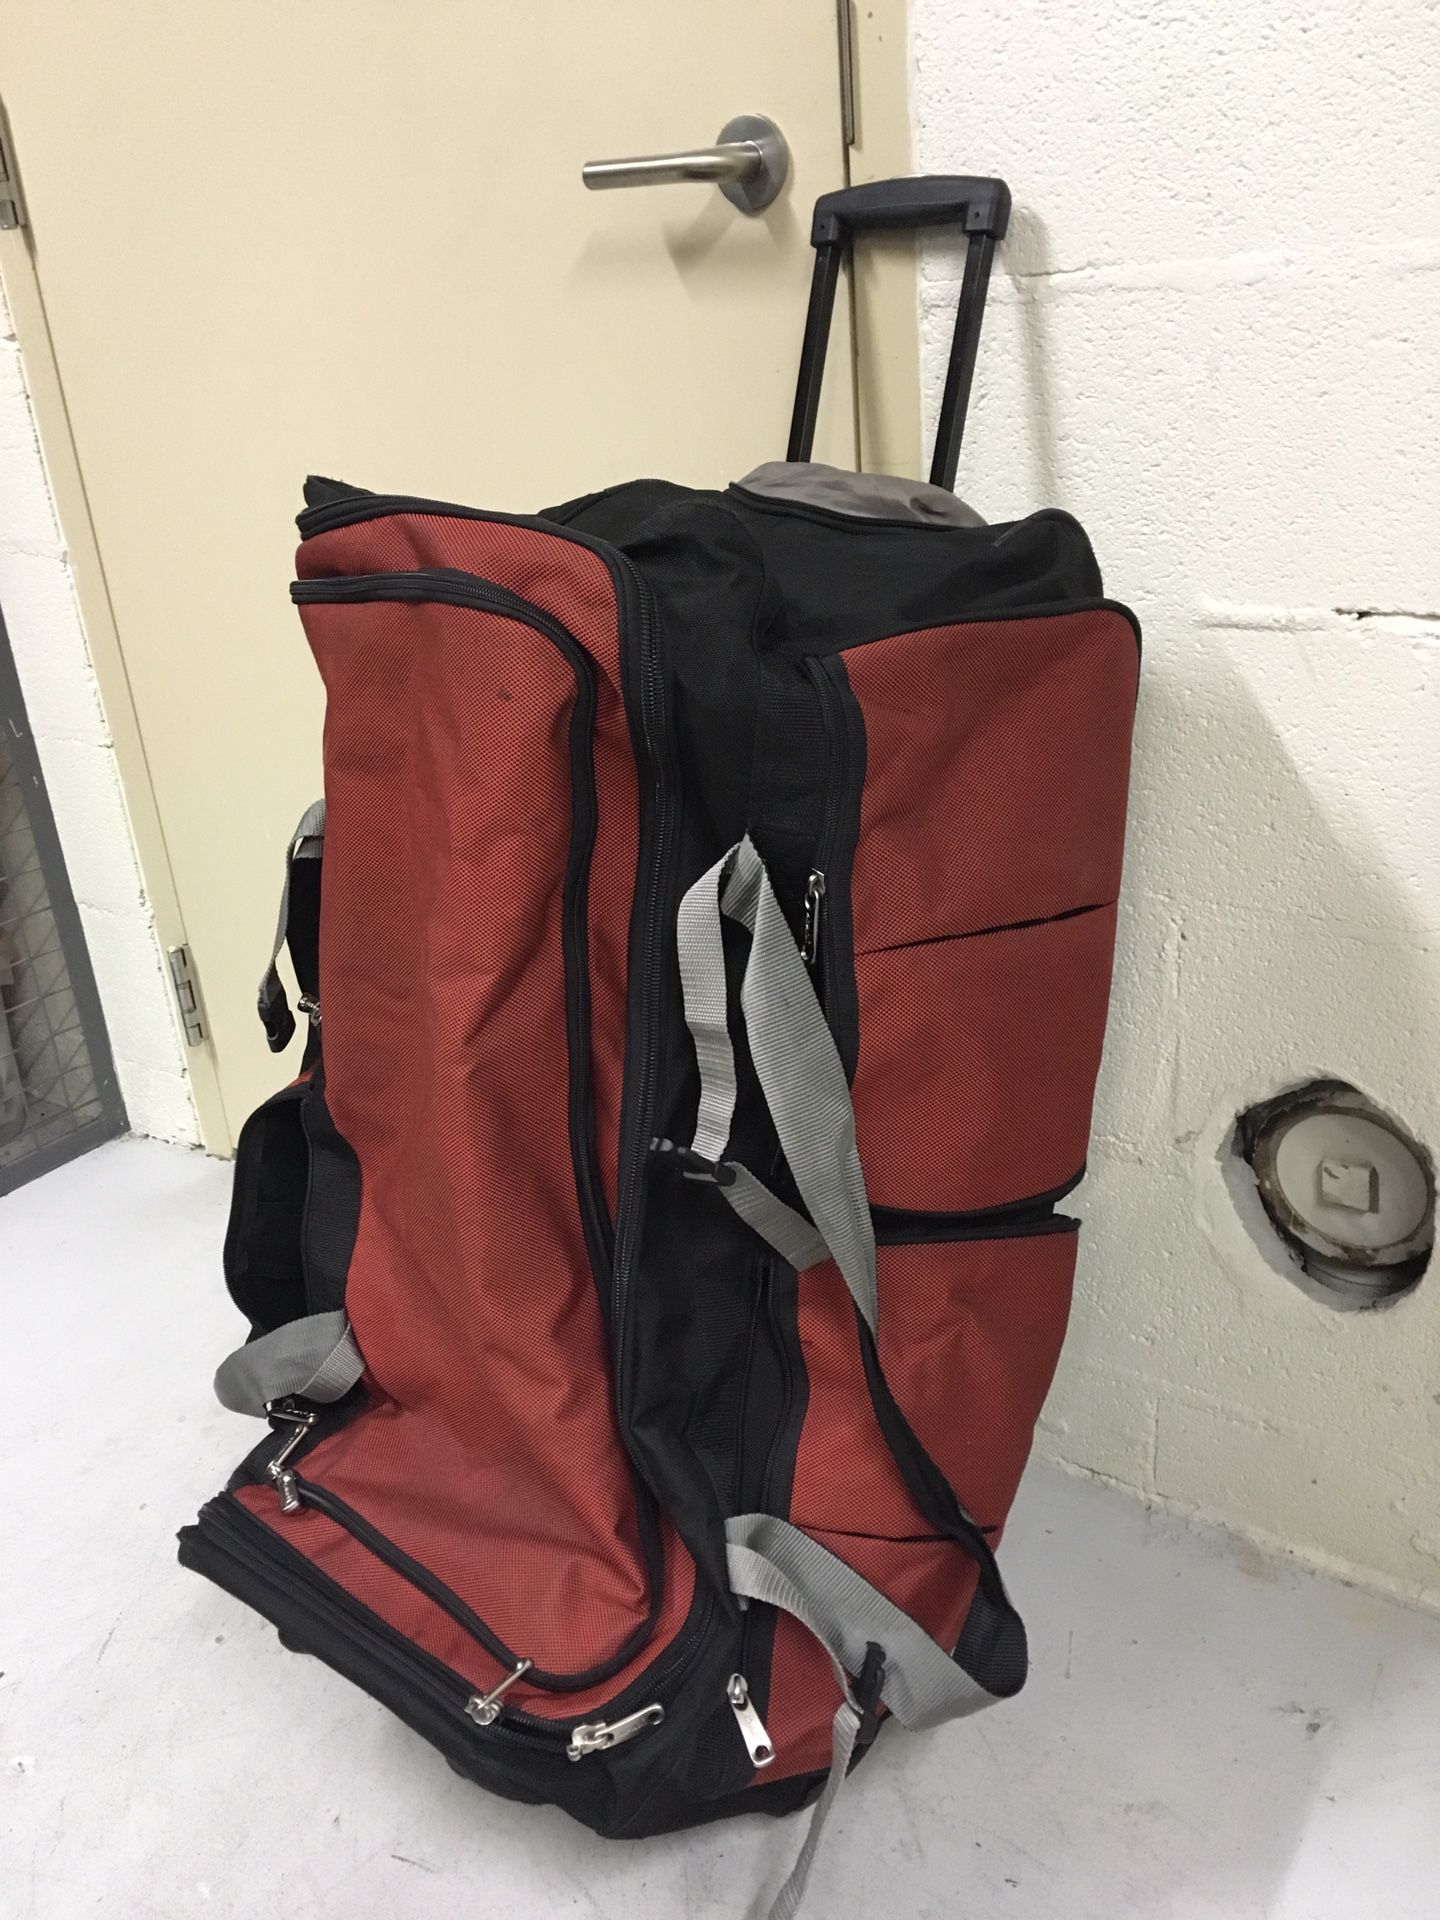 Duffle traveling bag with wheels - Atvalon